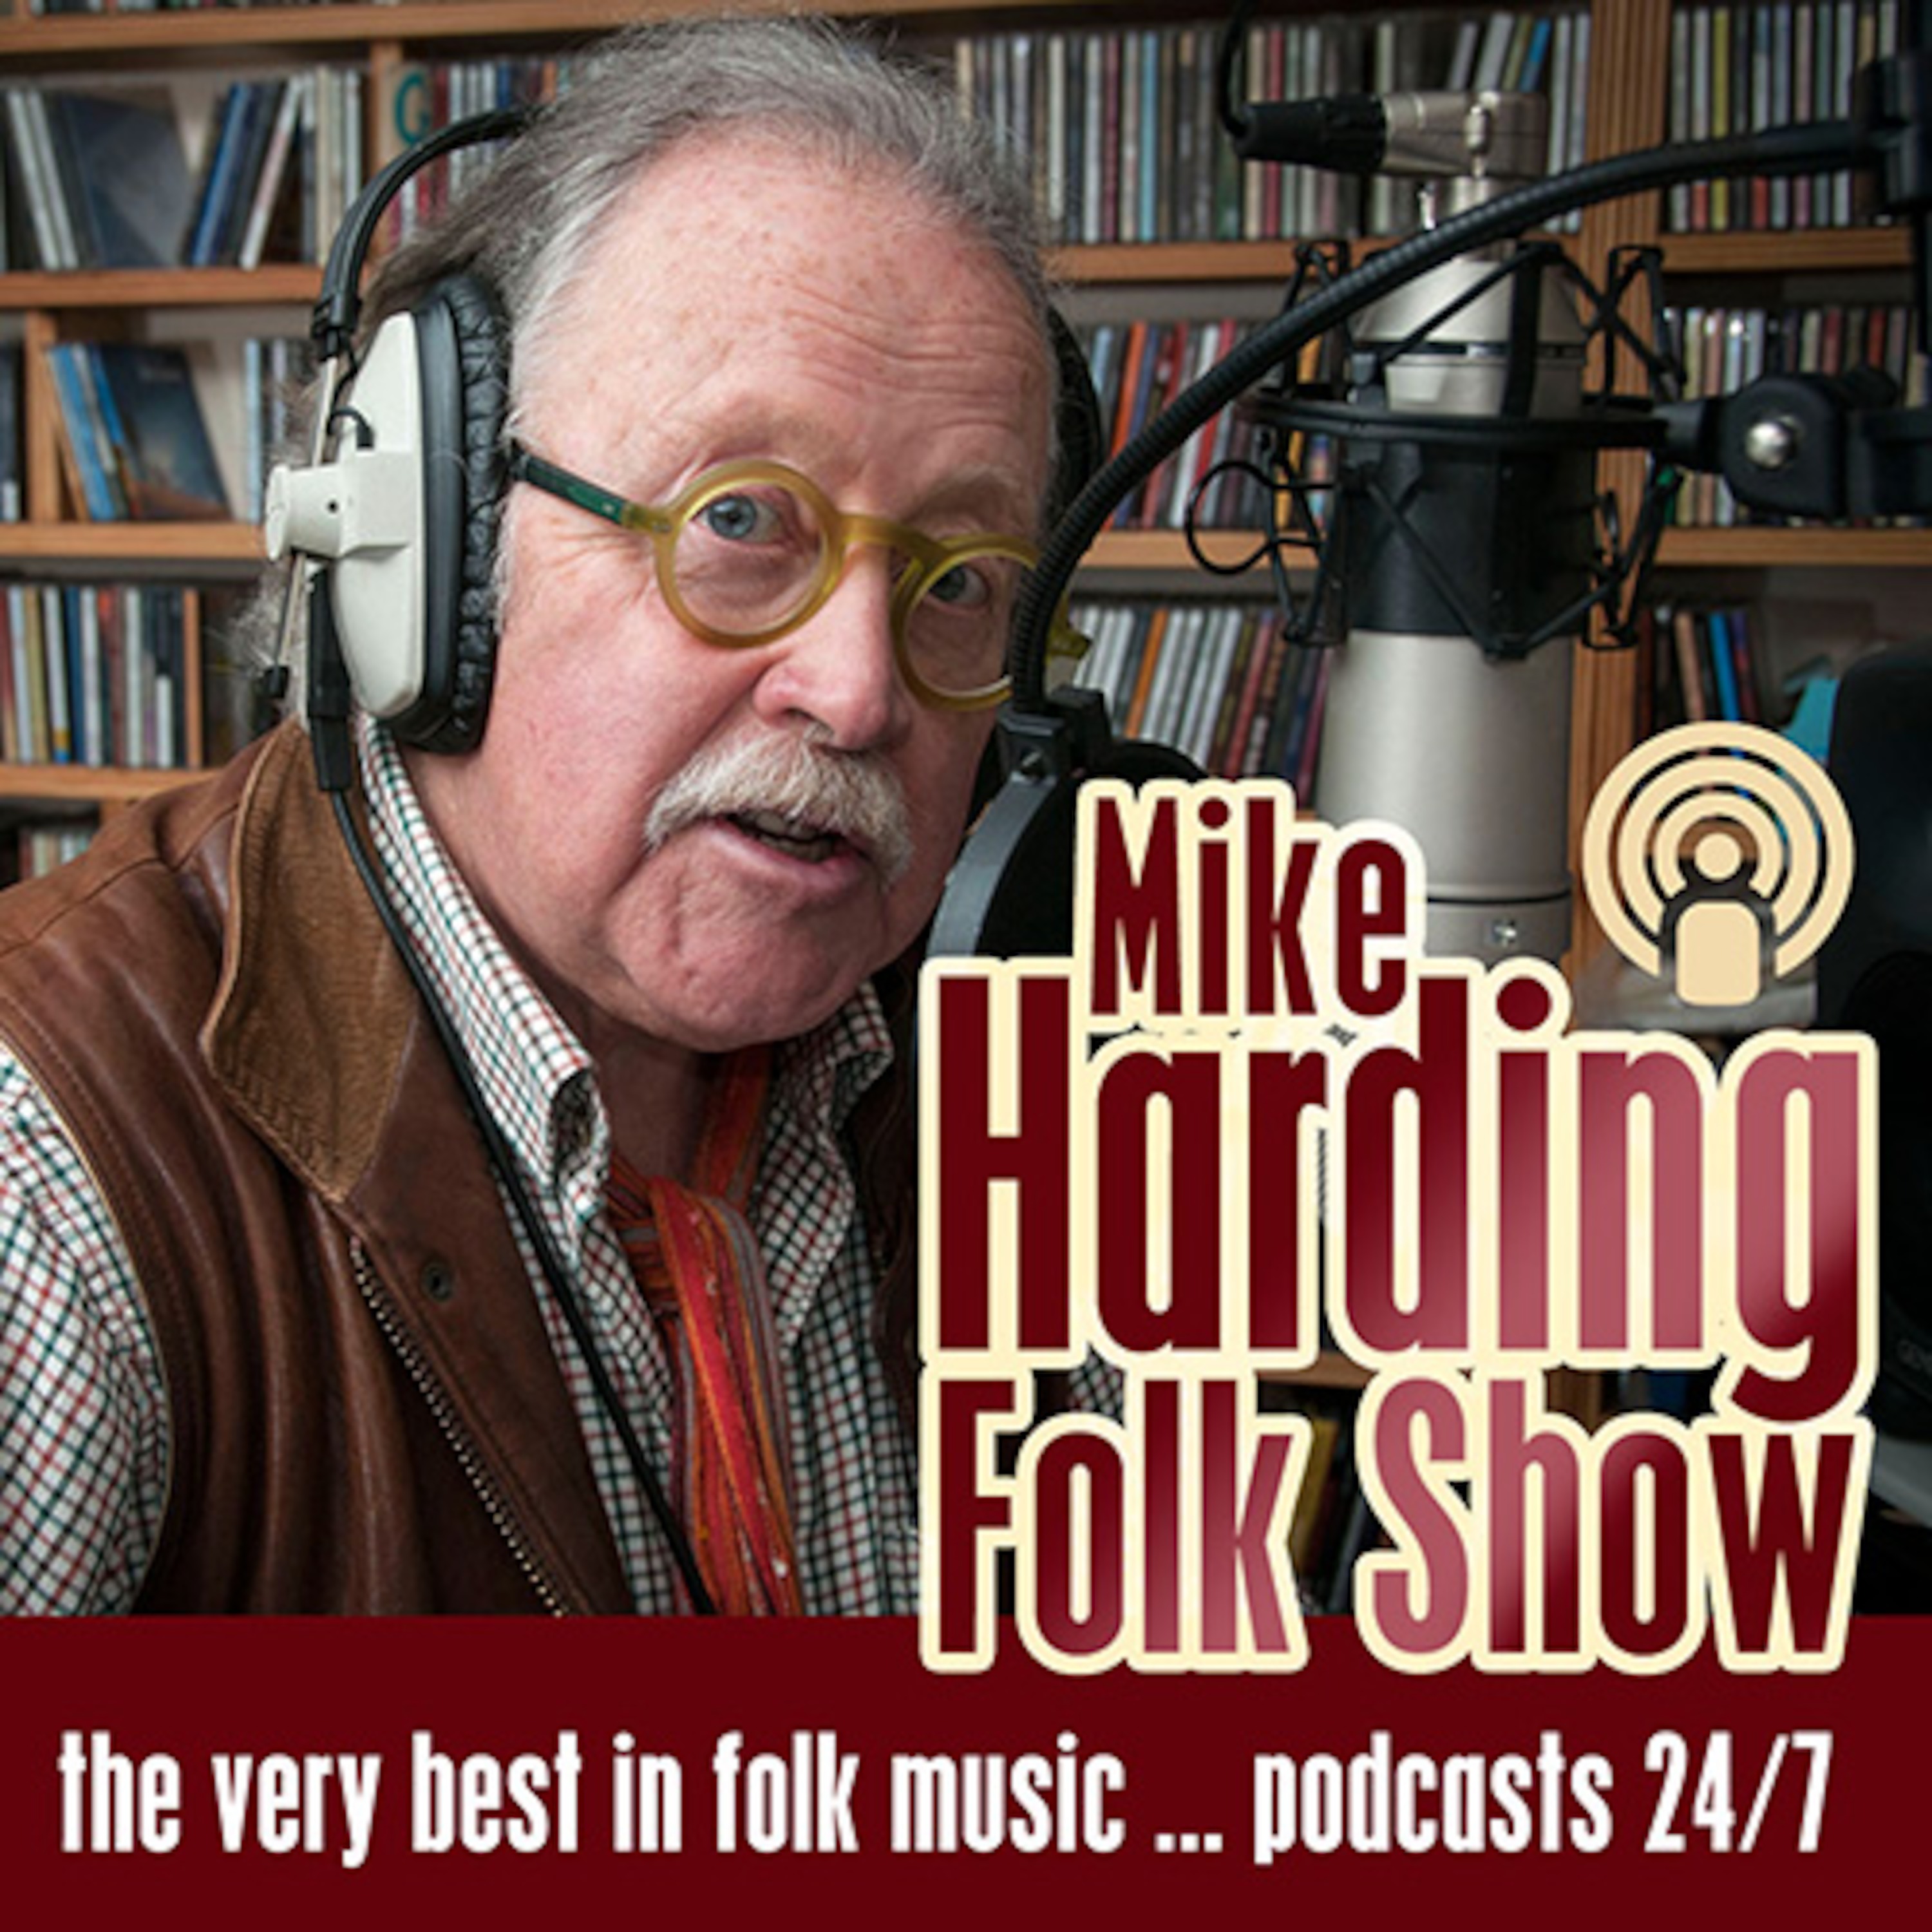 Mike Harding Folk Show 117